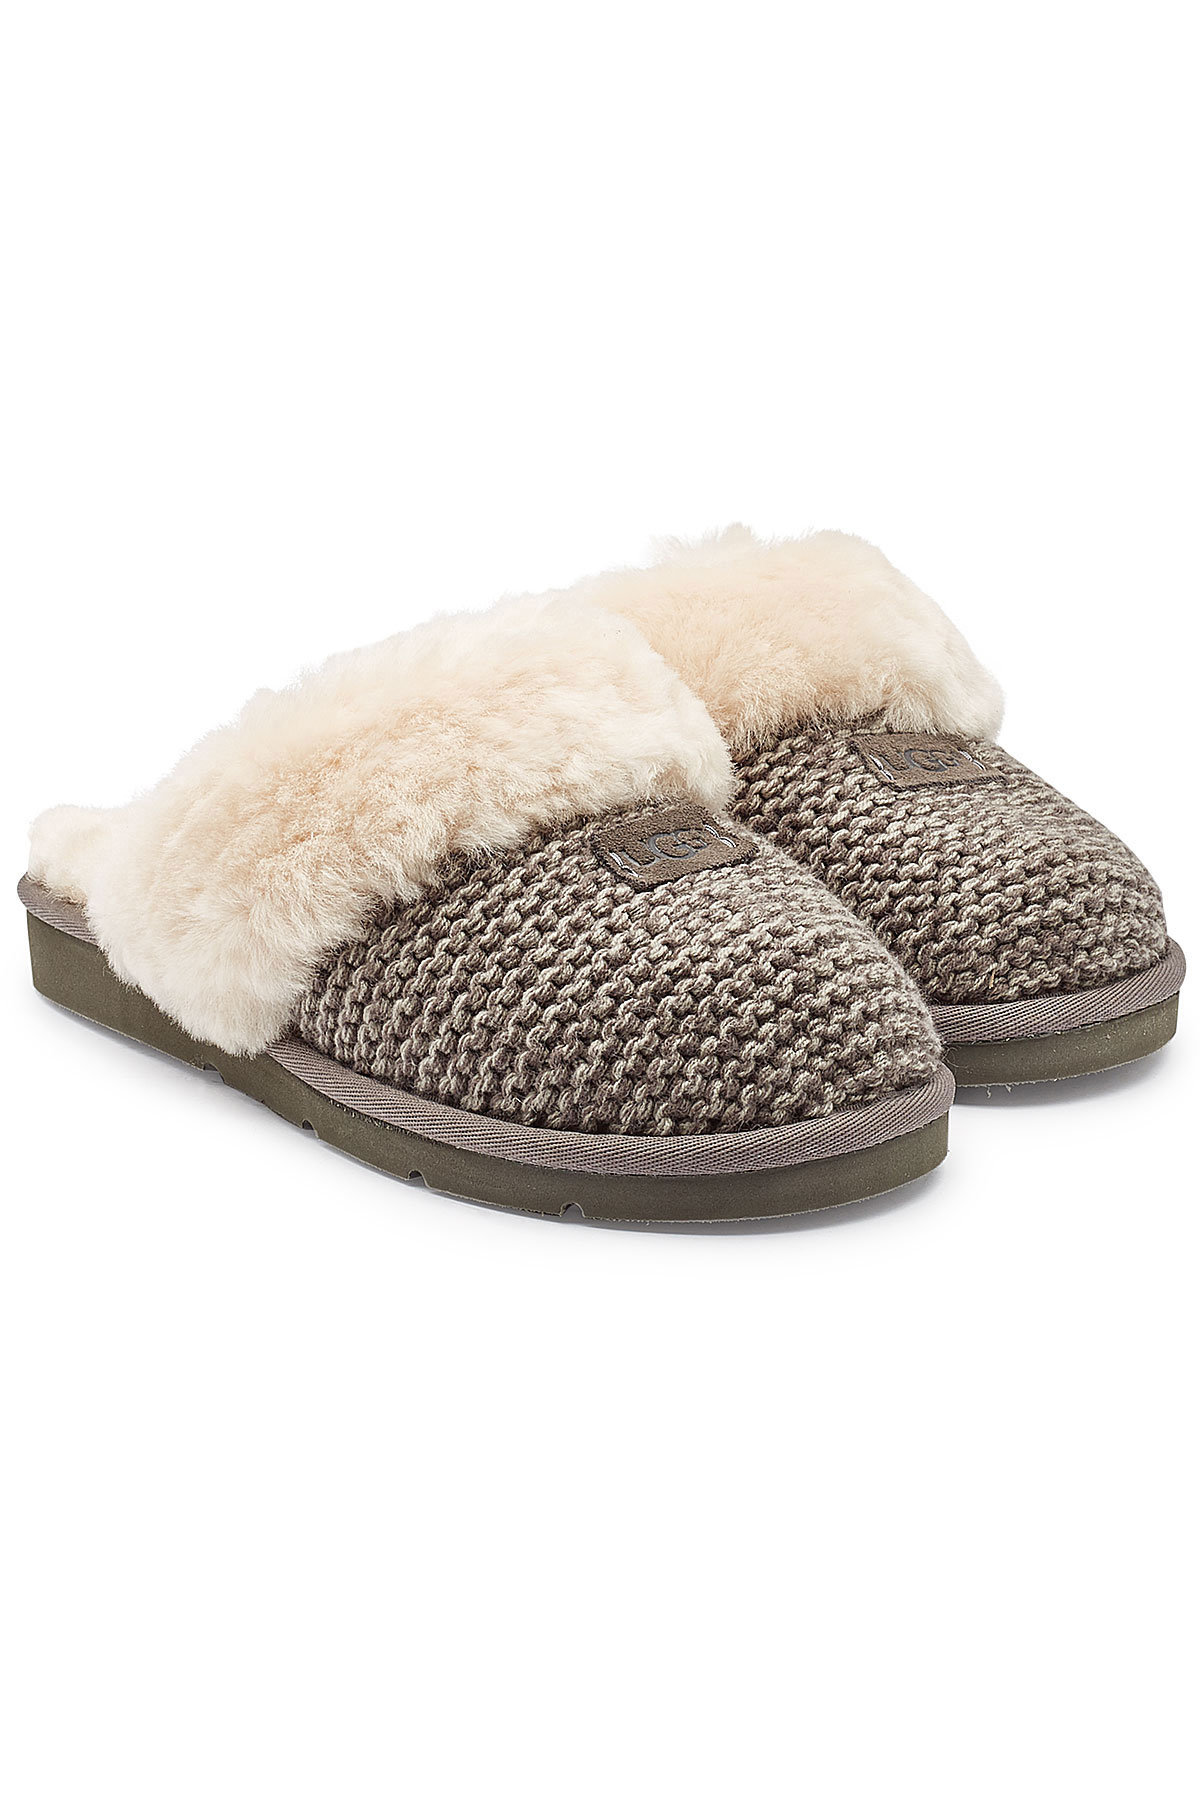 ugg cozy knit slippers sale,yasserchemicals.com